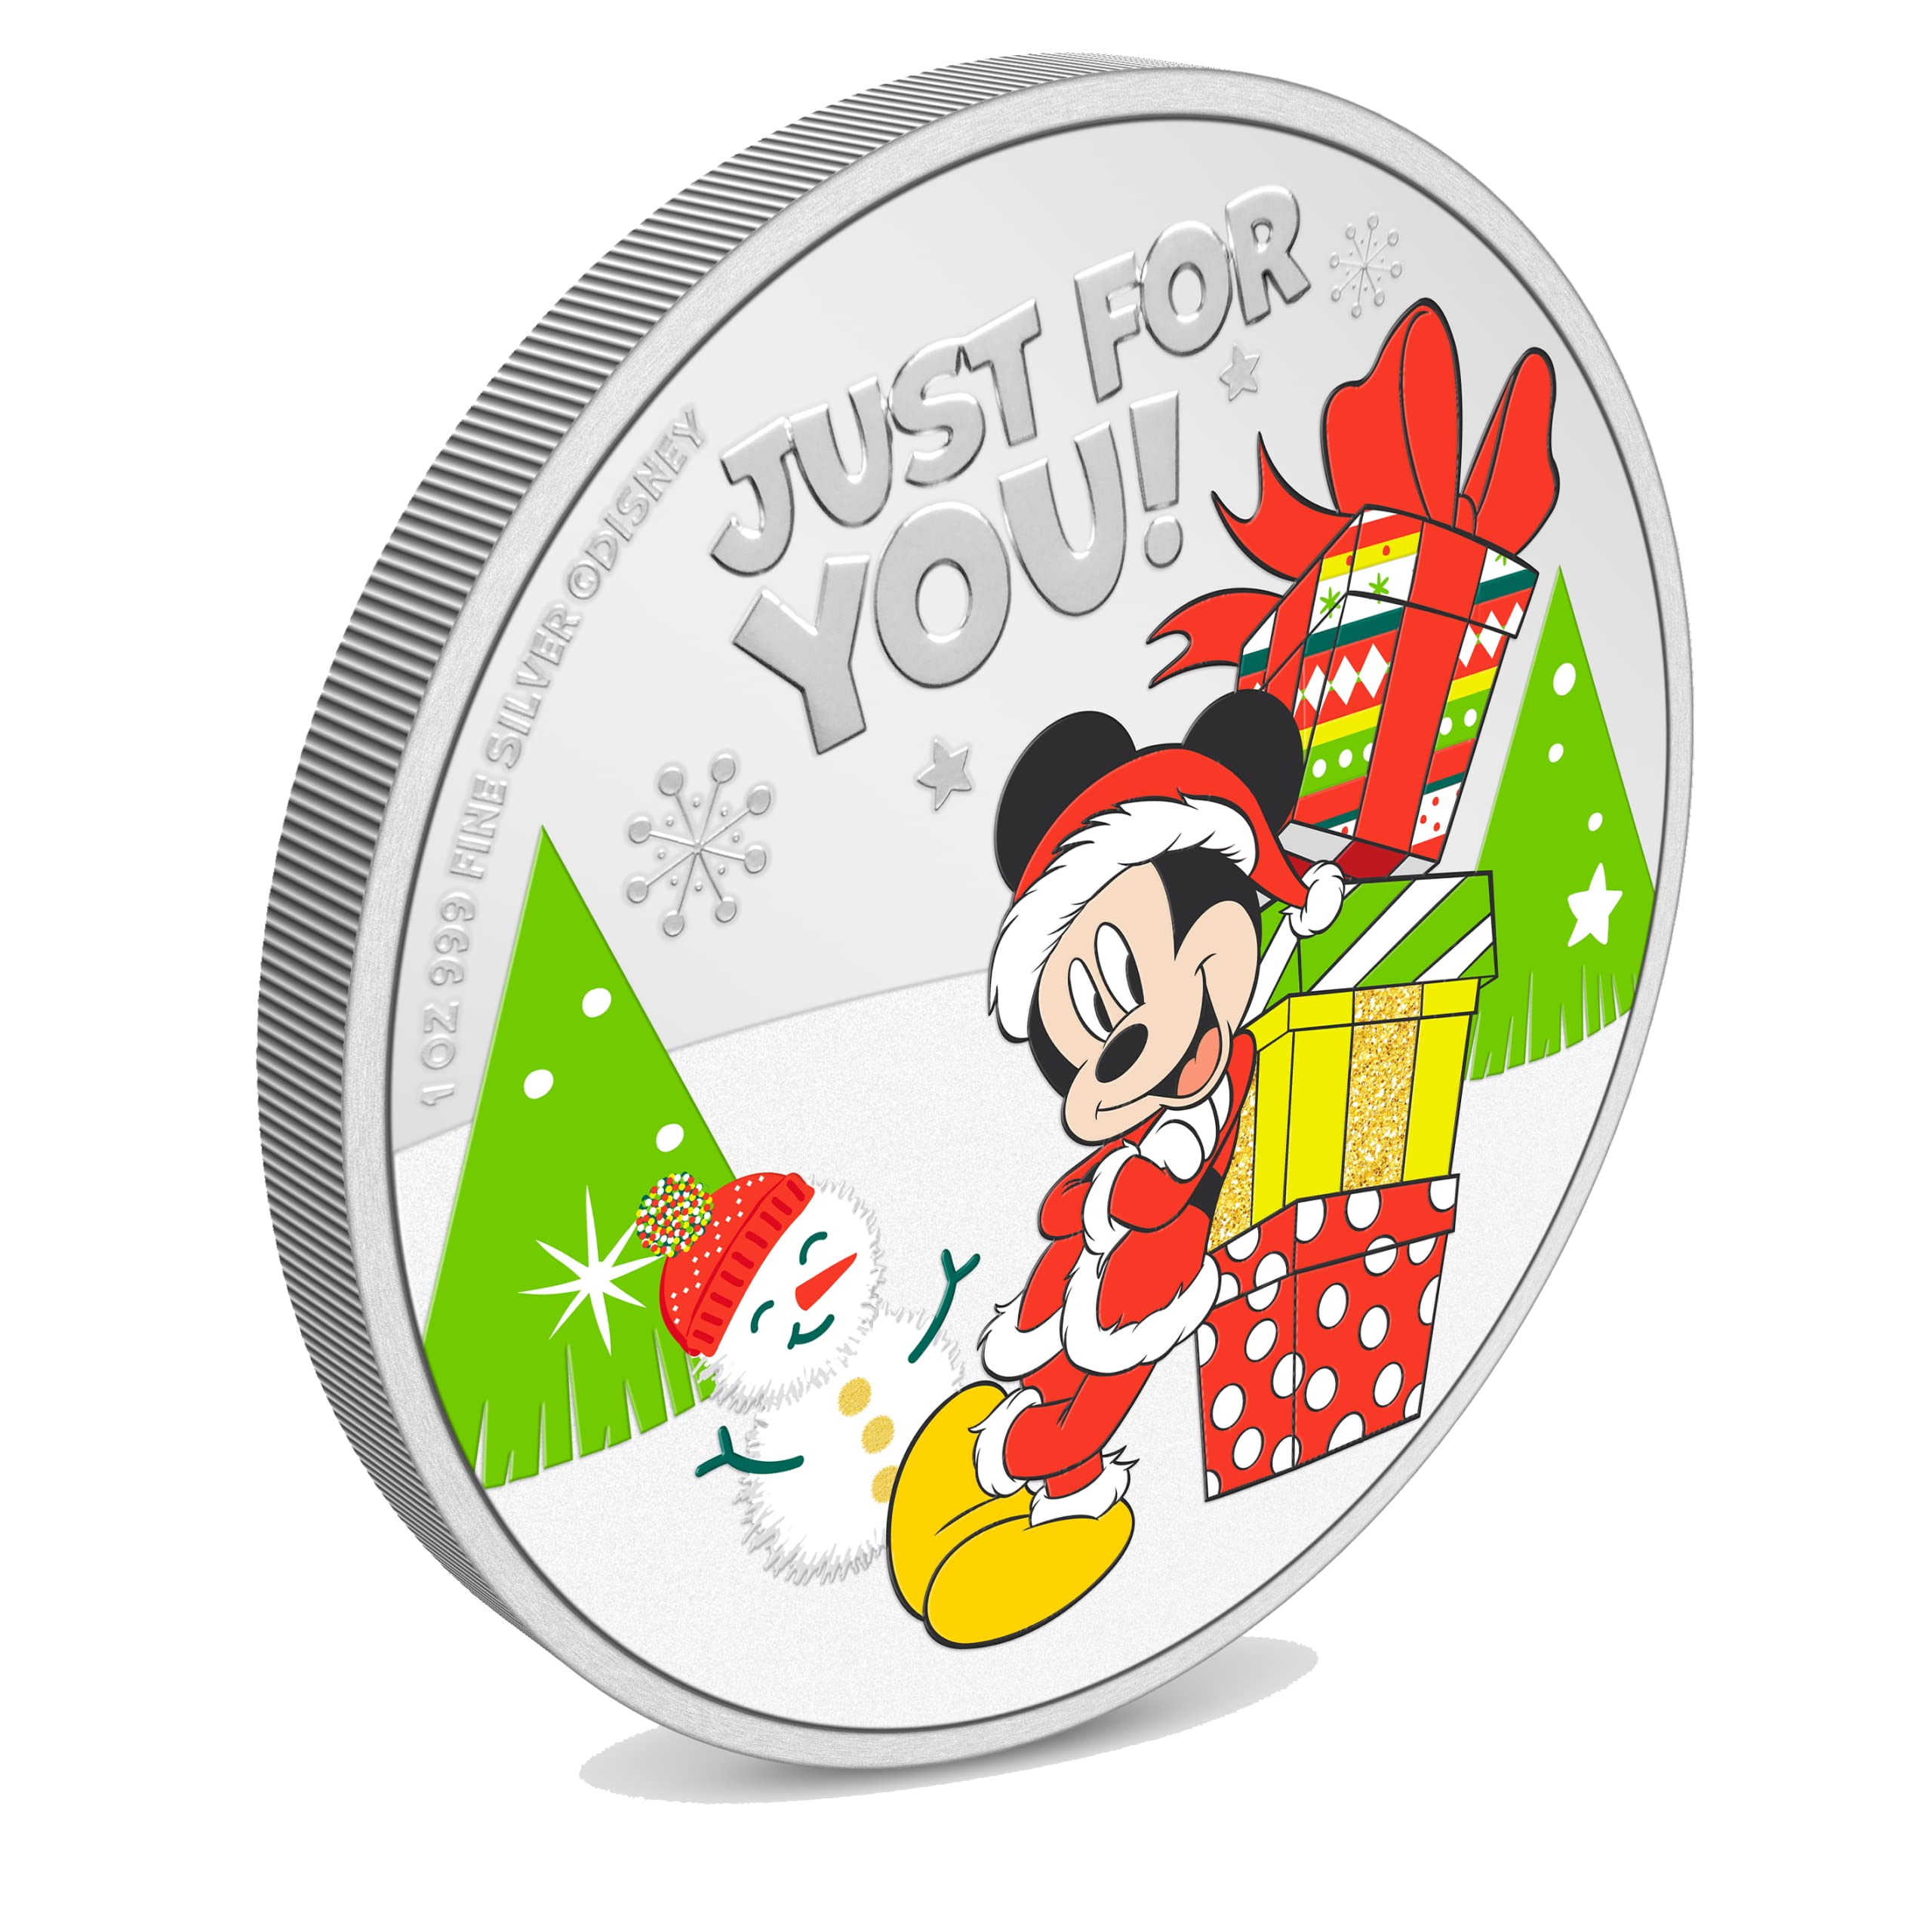 1 oz Disney Seasons Greetings Silver Coin